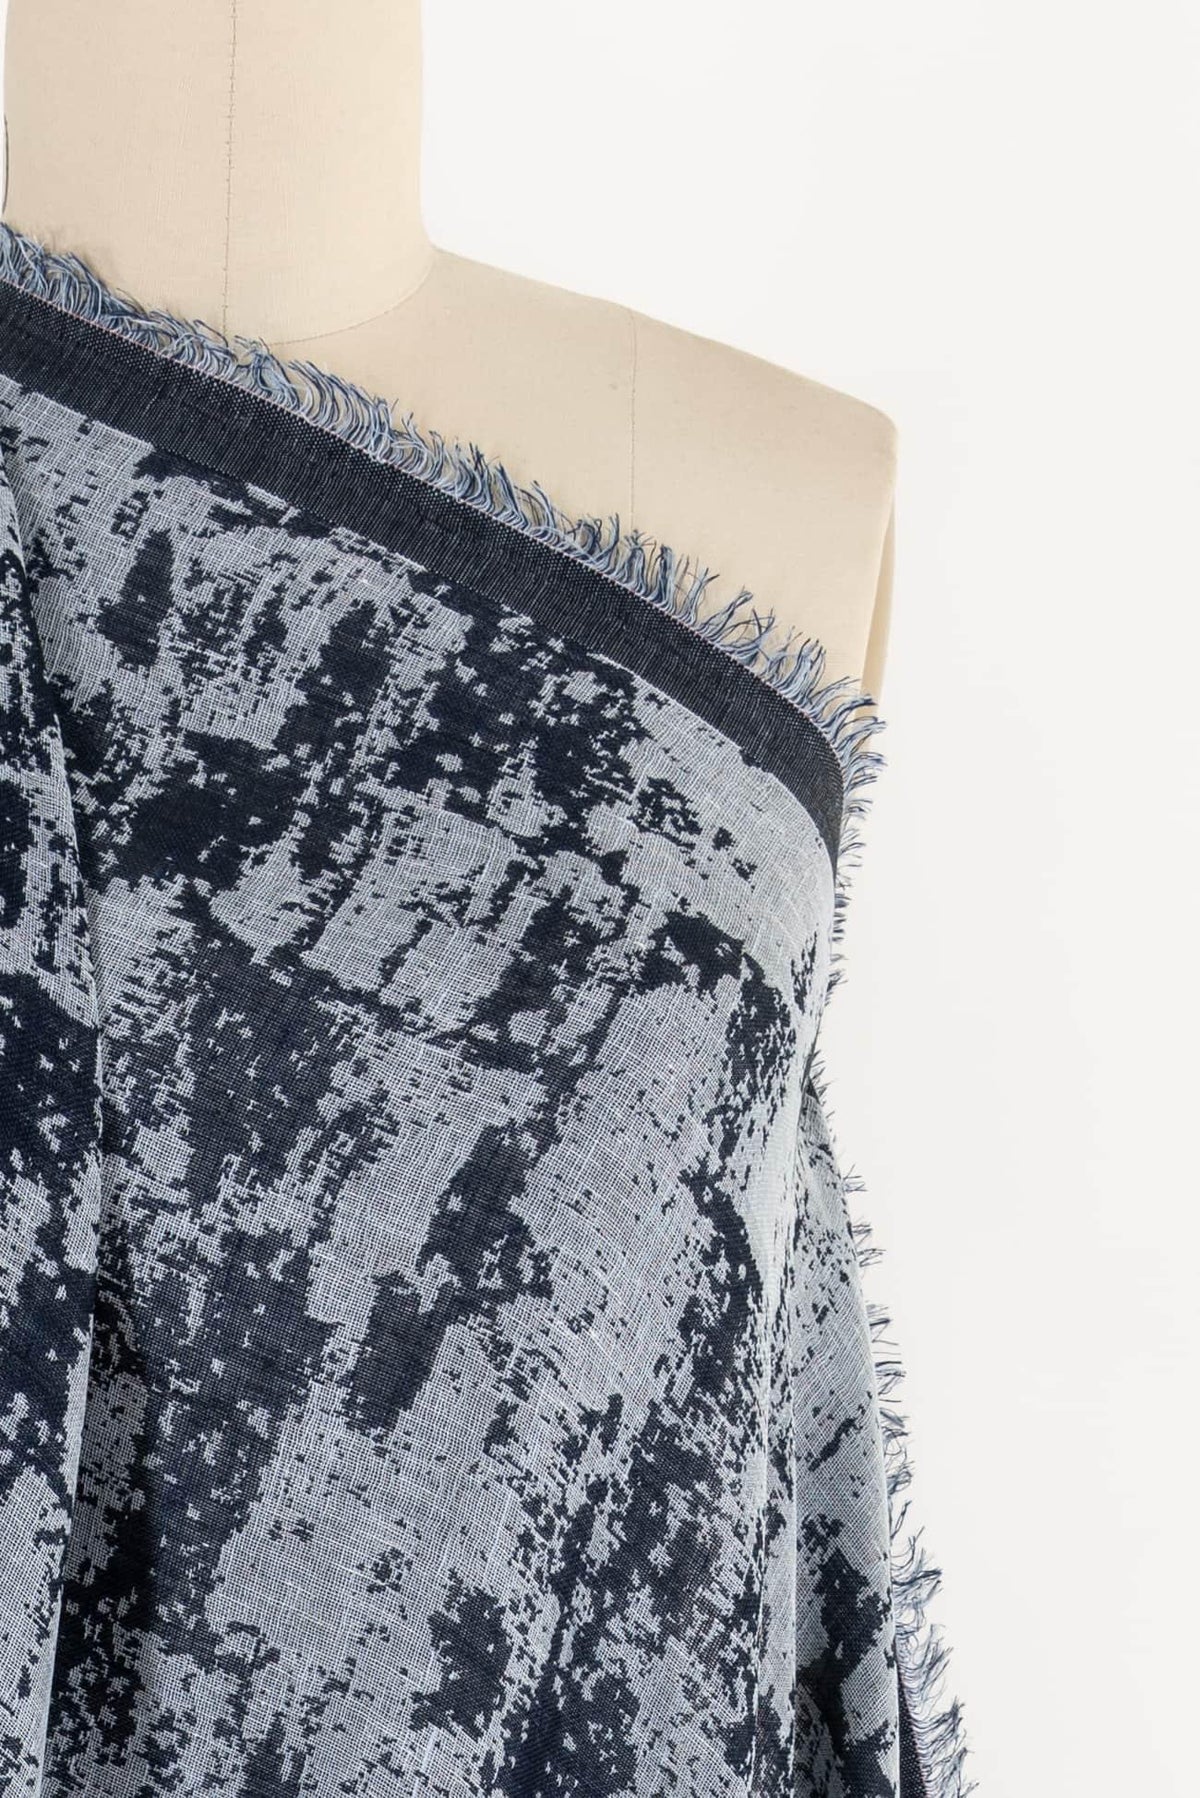 Blue Spatter Cotton/Linen Jacquard Gauze Woven - Marcy Tilton Fabrics